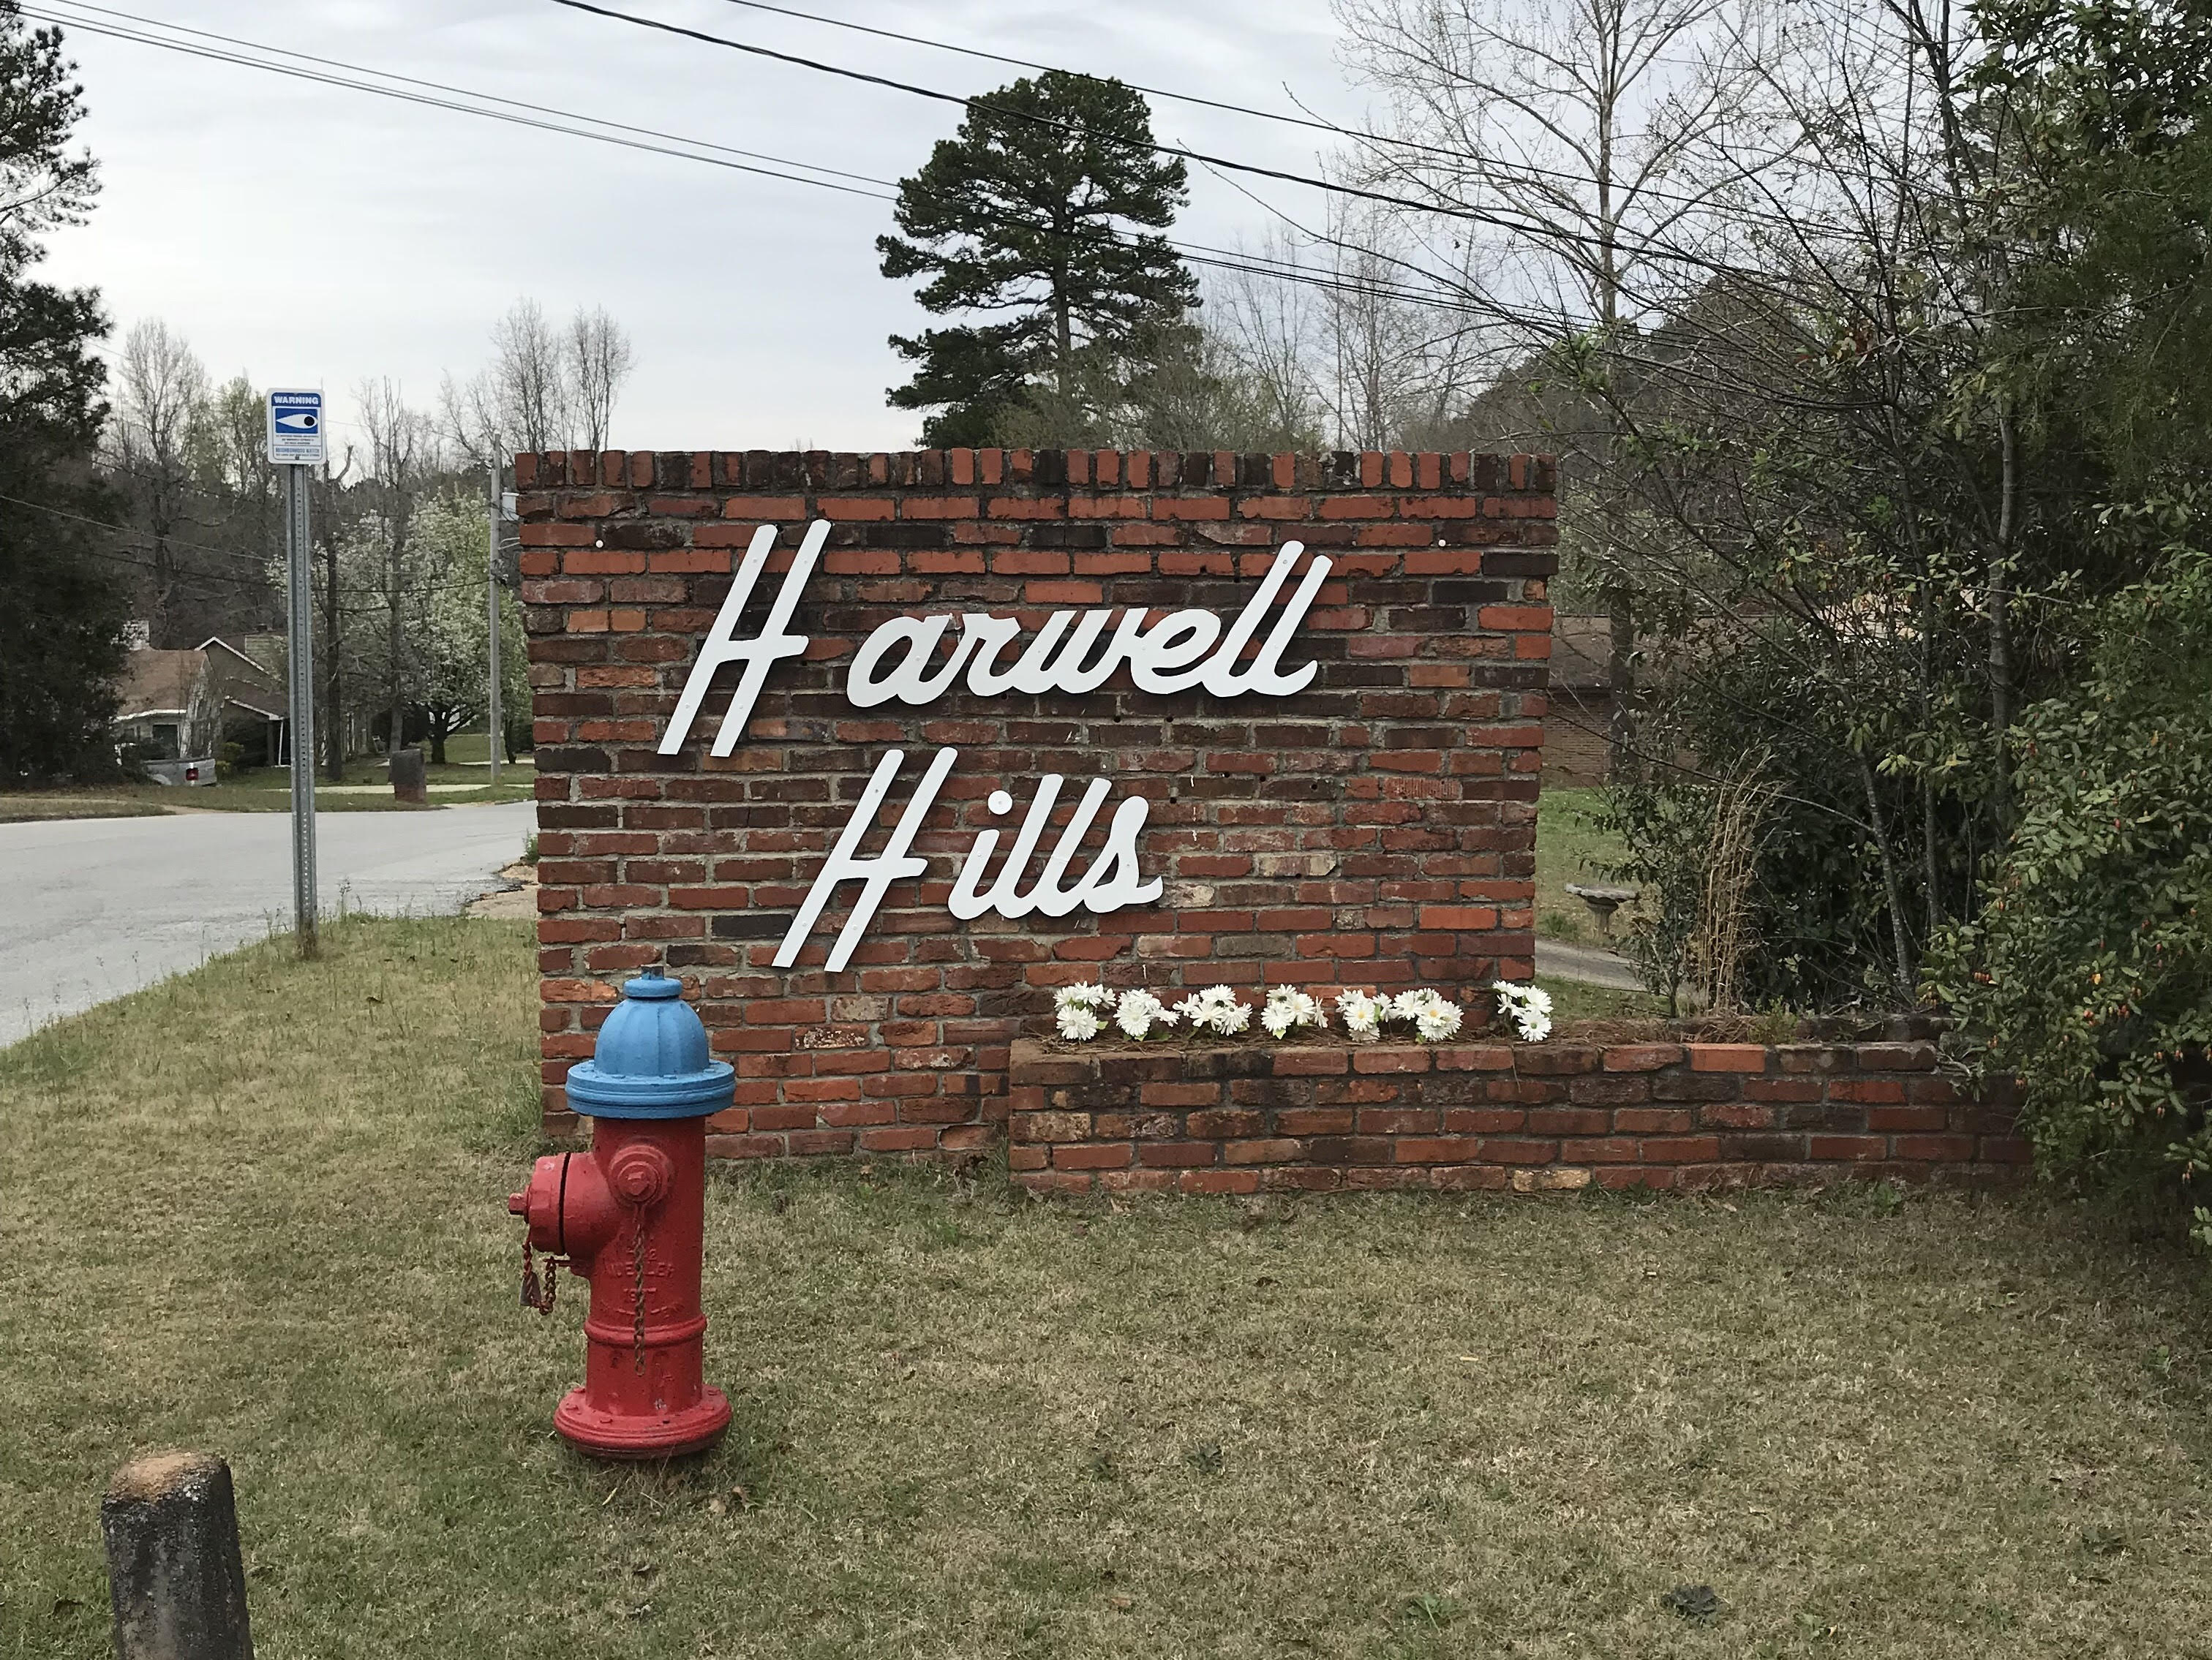 Harwell Hills Homes for Sale in Opelika AL